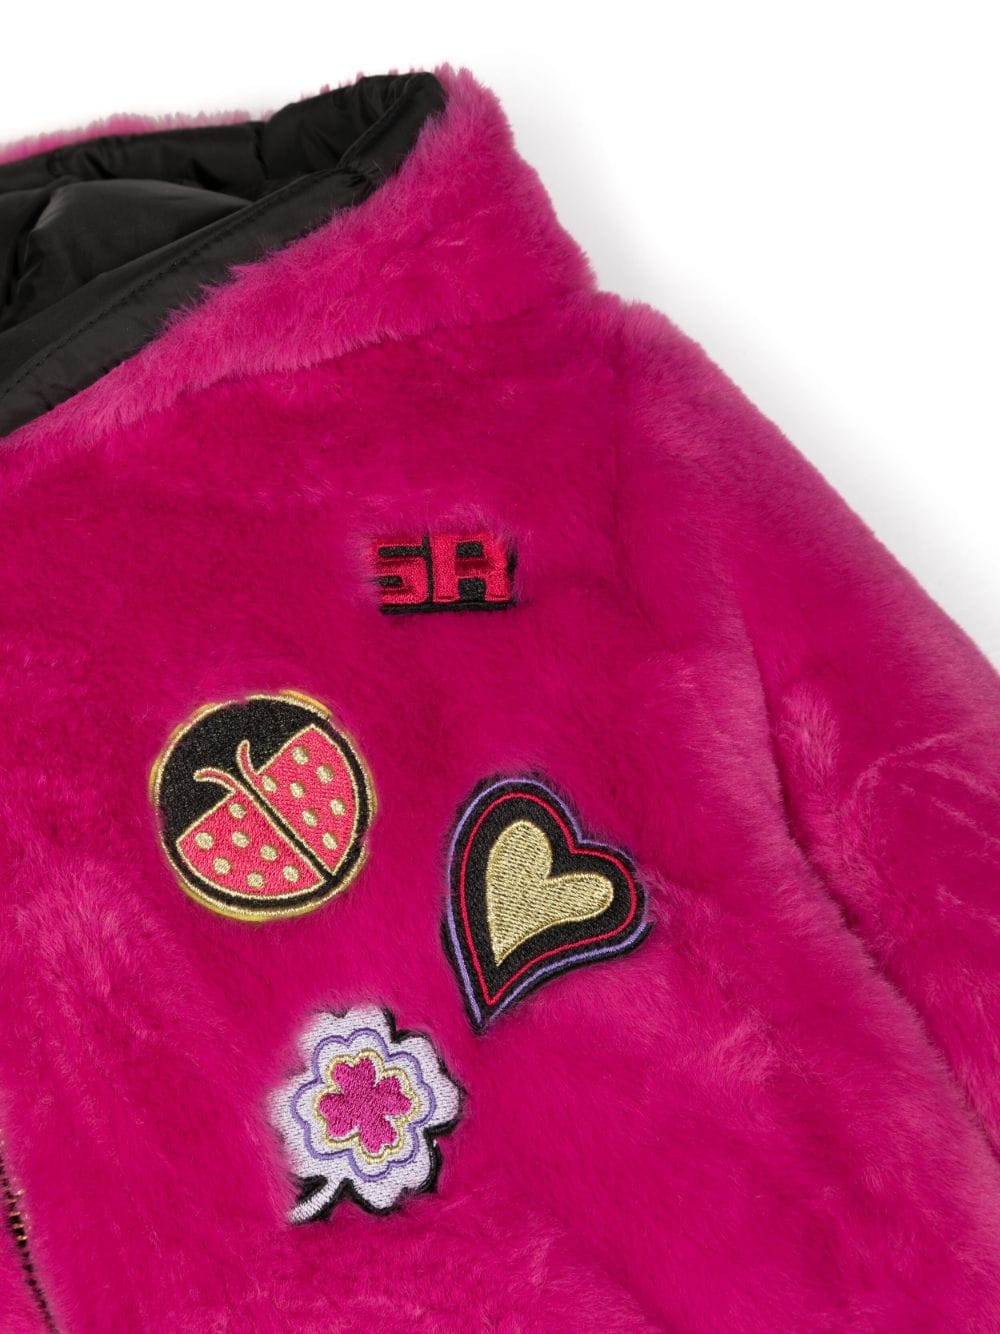 Sonia Rykiel Hooded Faux Fur Reversible Jacket